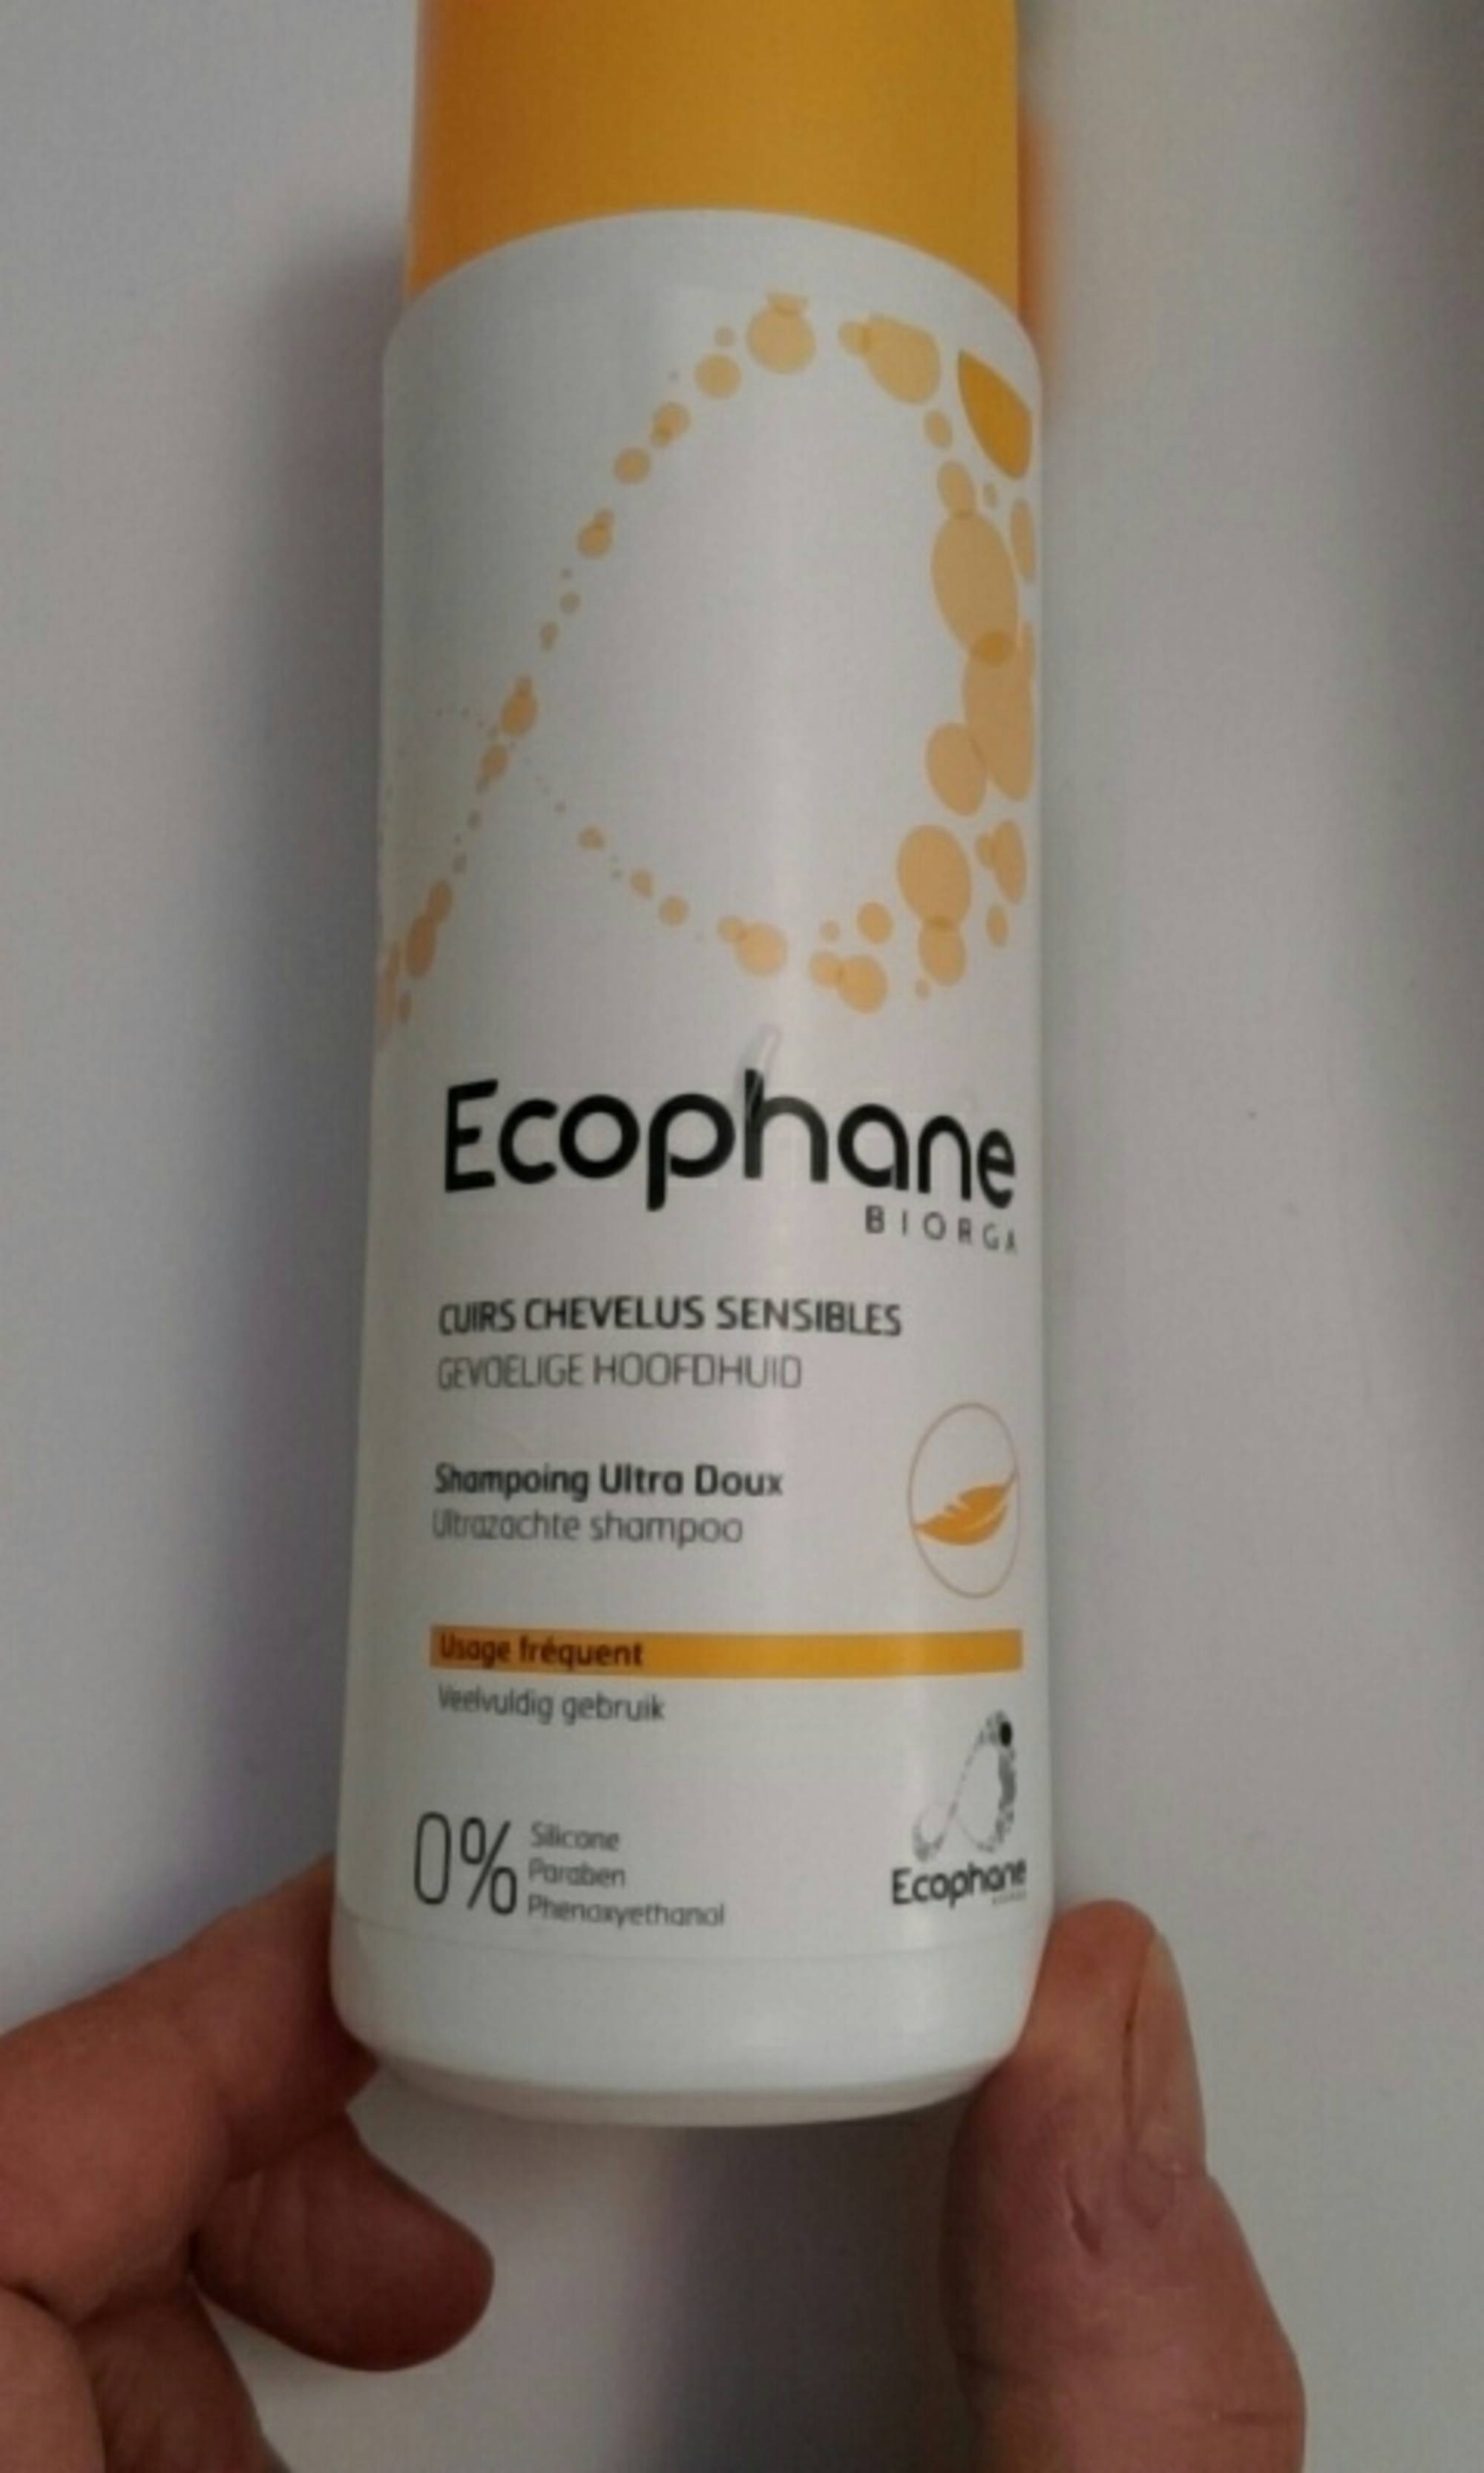 LABORATOIRES BIORGA - Ecophane - Shampoing ultra doux